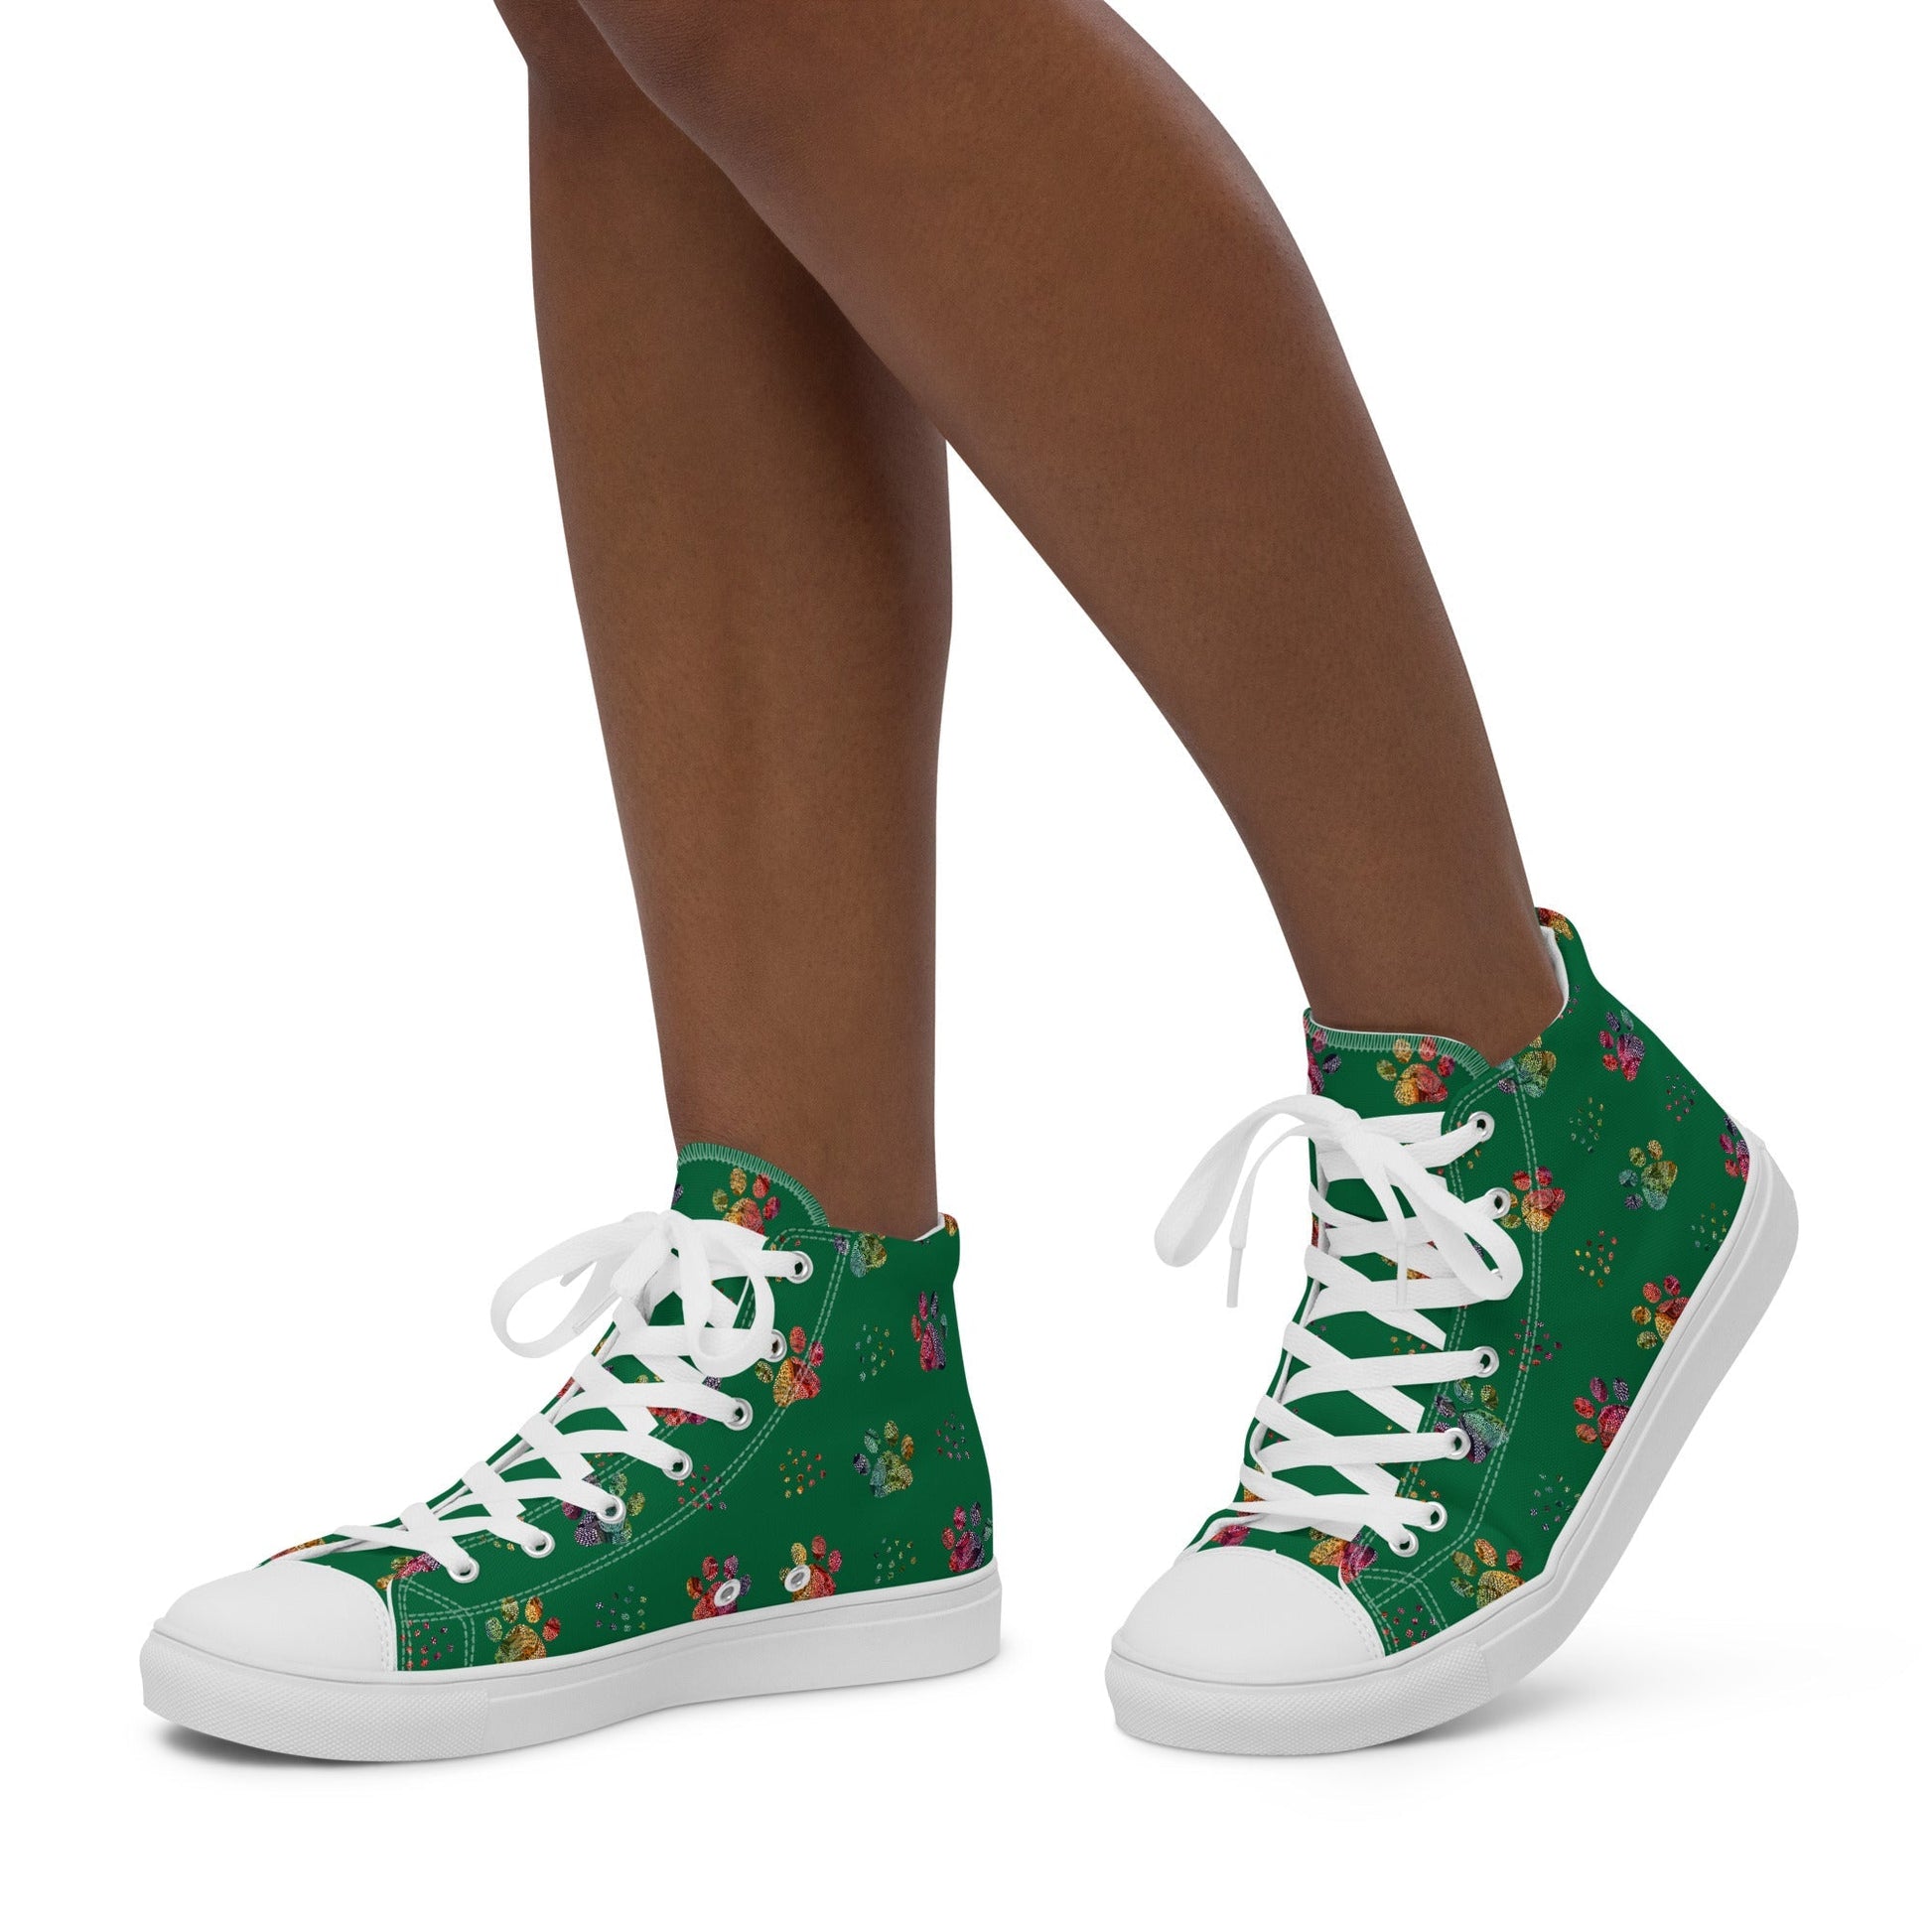 Women's Dark Green Paw Prints Sneakers - DoggyLoveandMore